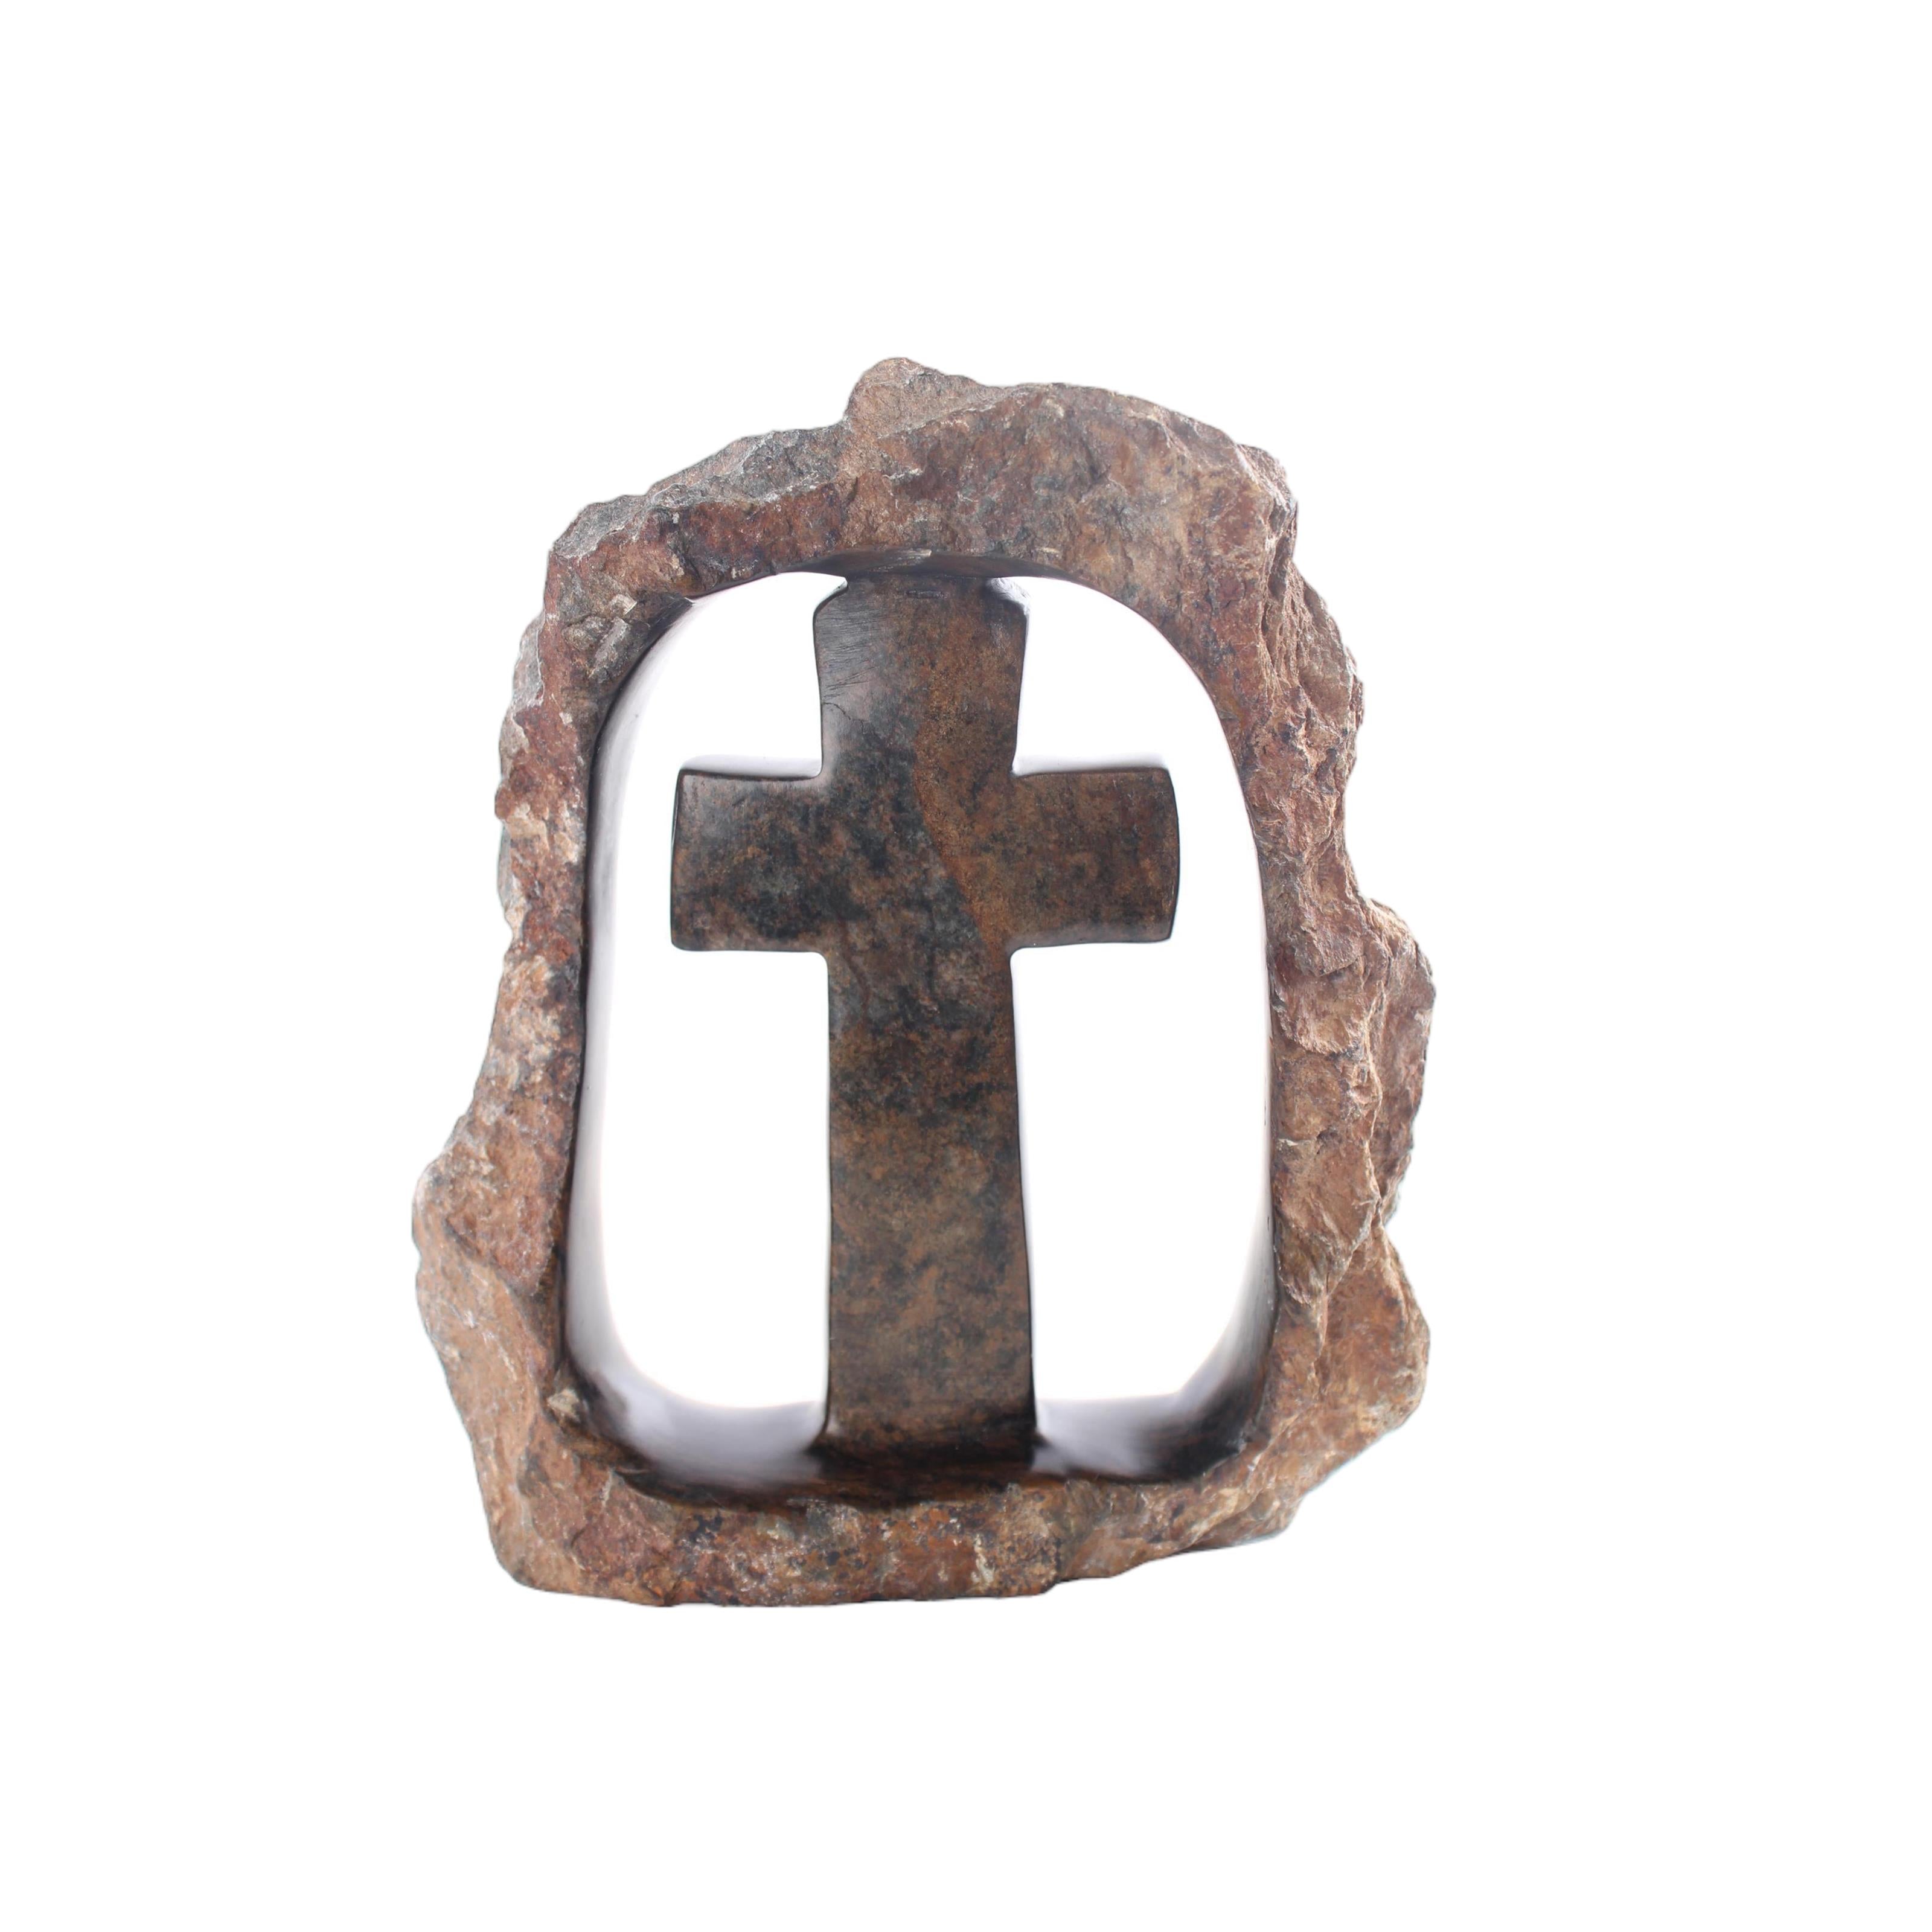 Shona Tribe Serpentine Stone Crosses  ~8.3" Tall